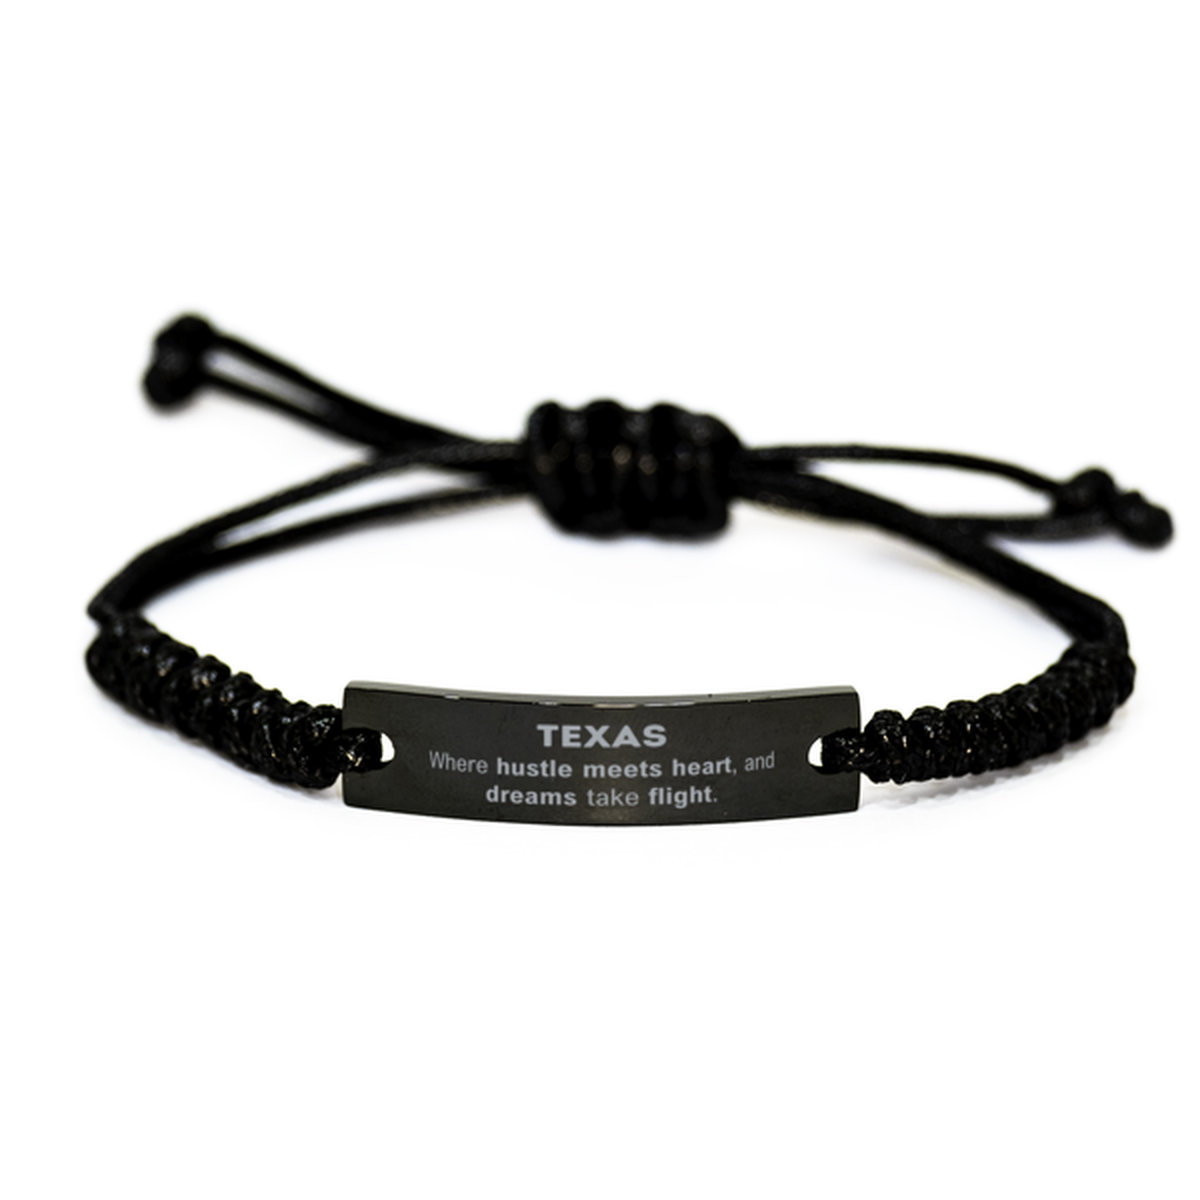 Texas: Where hustle meets heart, and dreams take flight, Texas Gifts, Proud Texas Christmas Birthday Texas Black Rope Bracelet, Texas State People, Men, Women, Friends